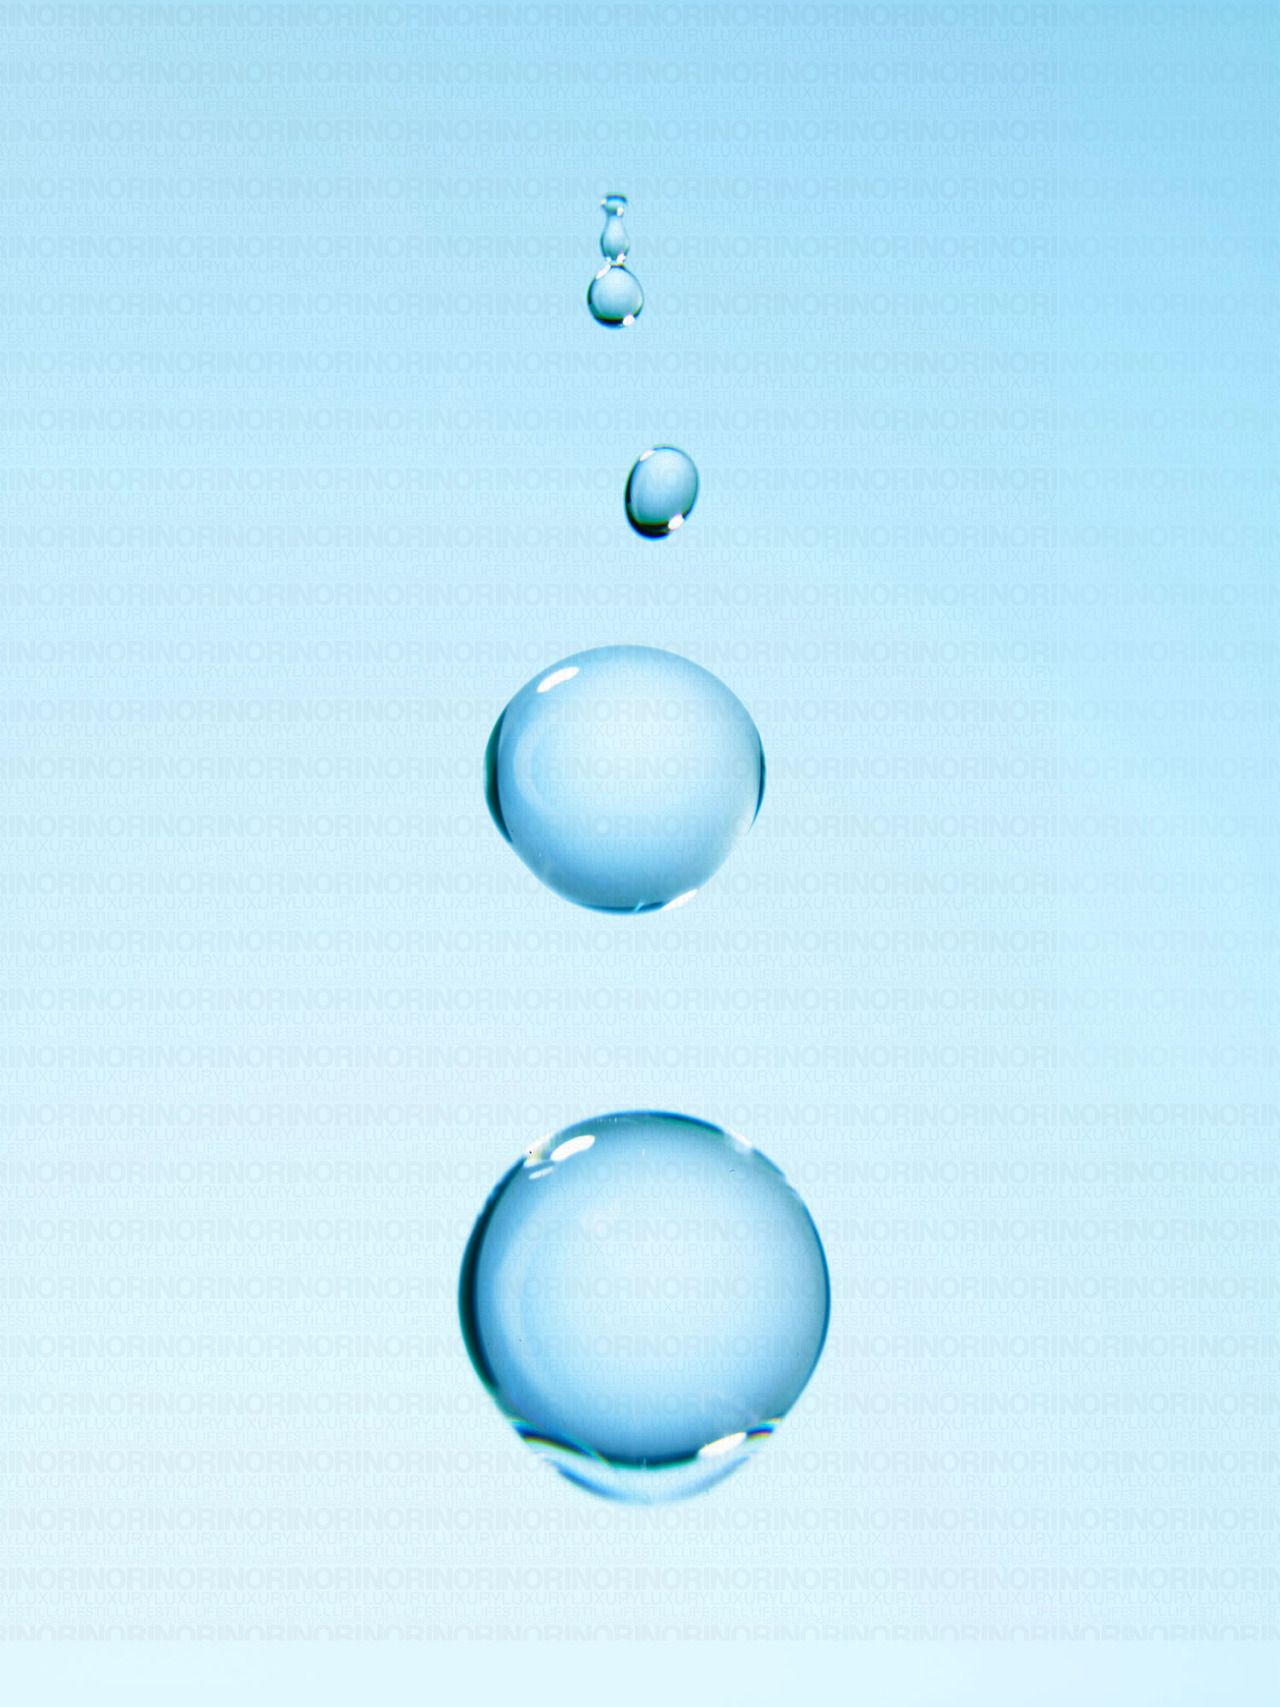 water, refresh, idea, water droplets, splash, droplet, still life ...